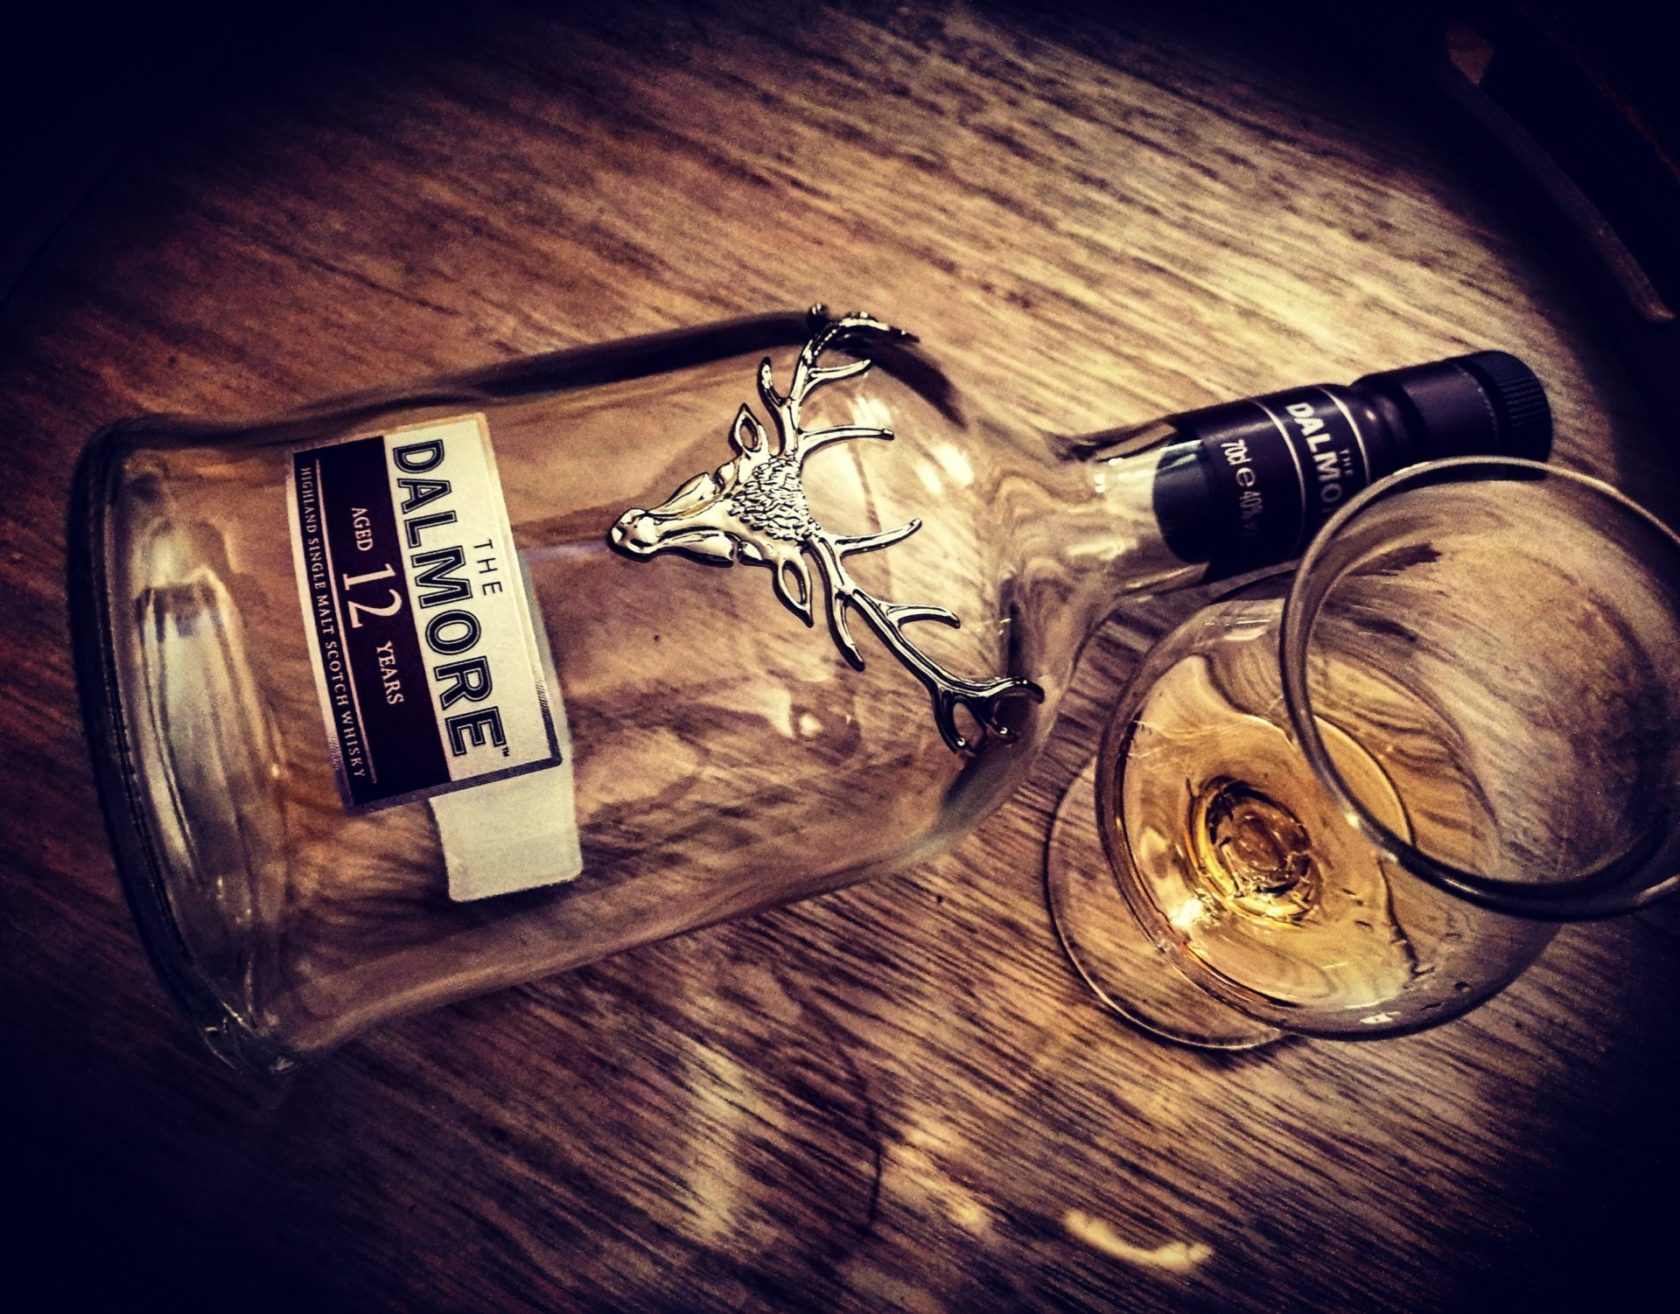 The Dalmore 12 Highland Single Malt Scotch Whisky